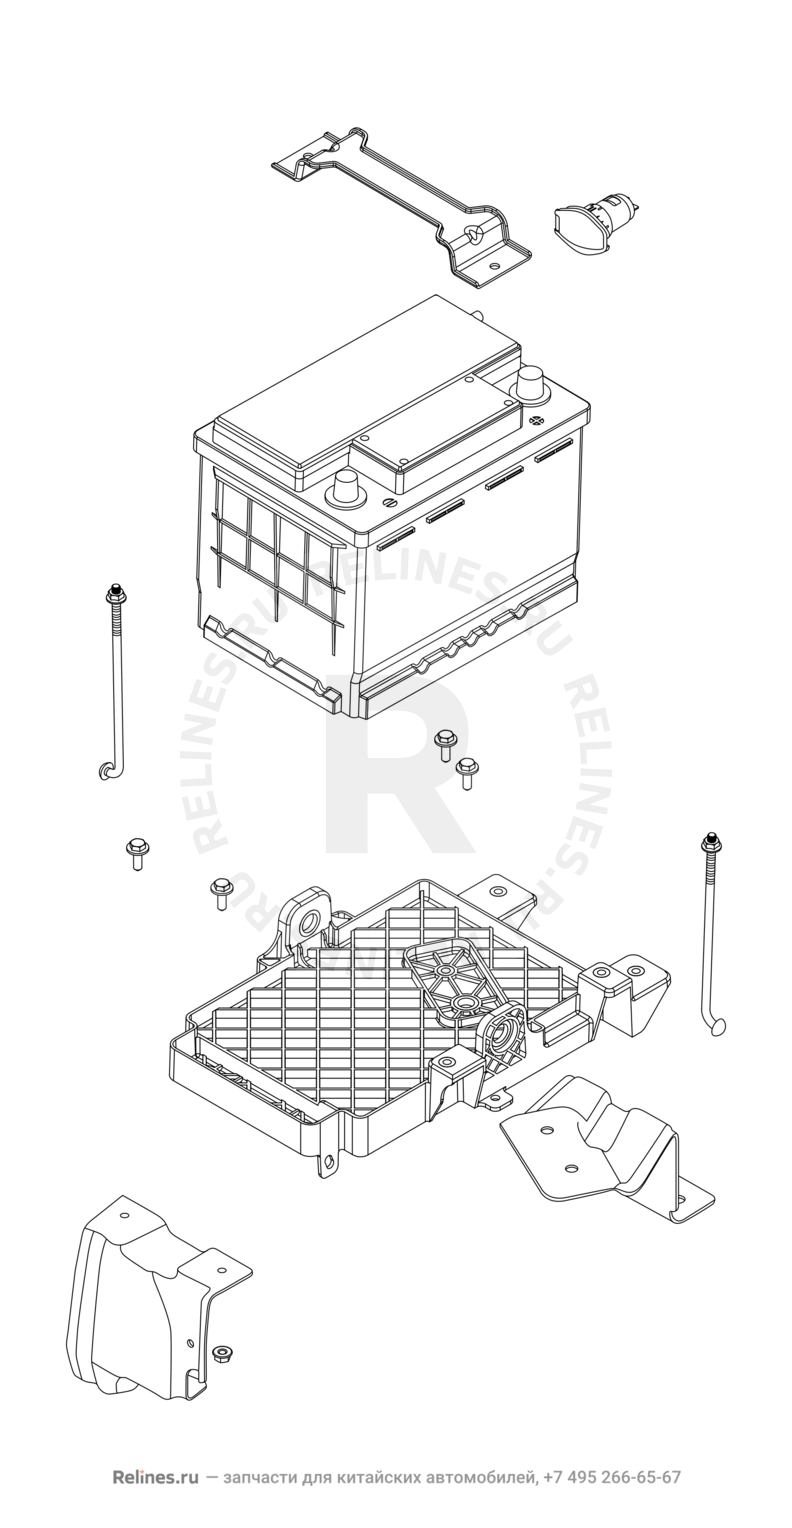 Запчасти Chery Tiggo 2 Pro Поколение I (2021)  — Аккумулятор (1) — схема